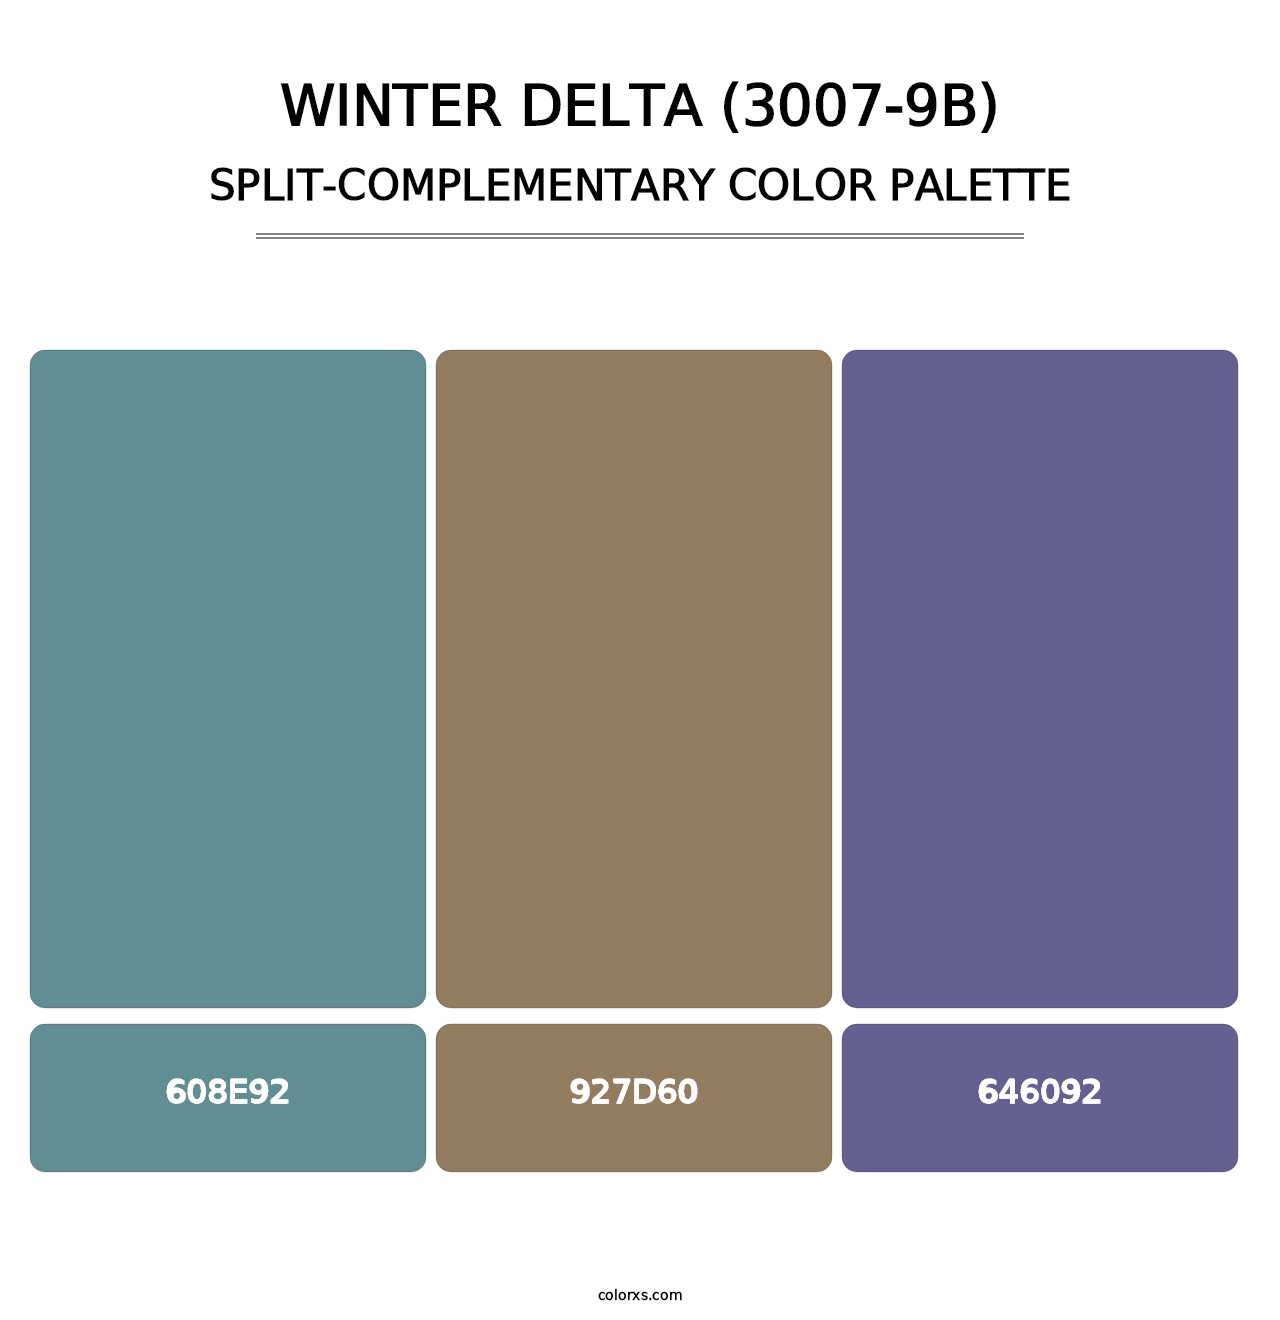 Winter Delta (3007-9B) - Split-Complementary Color Palette